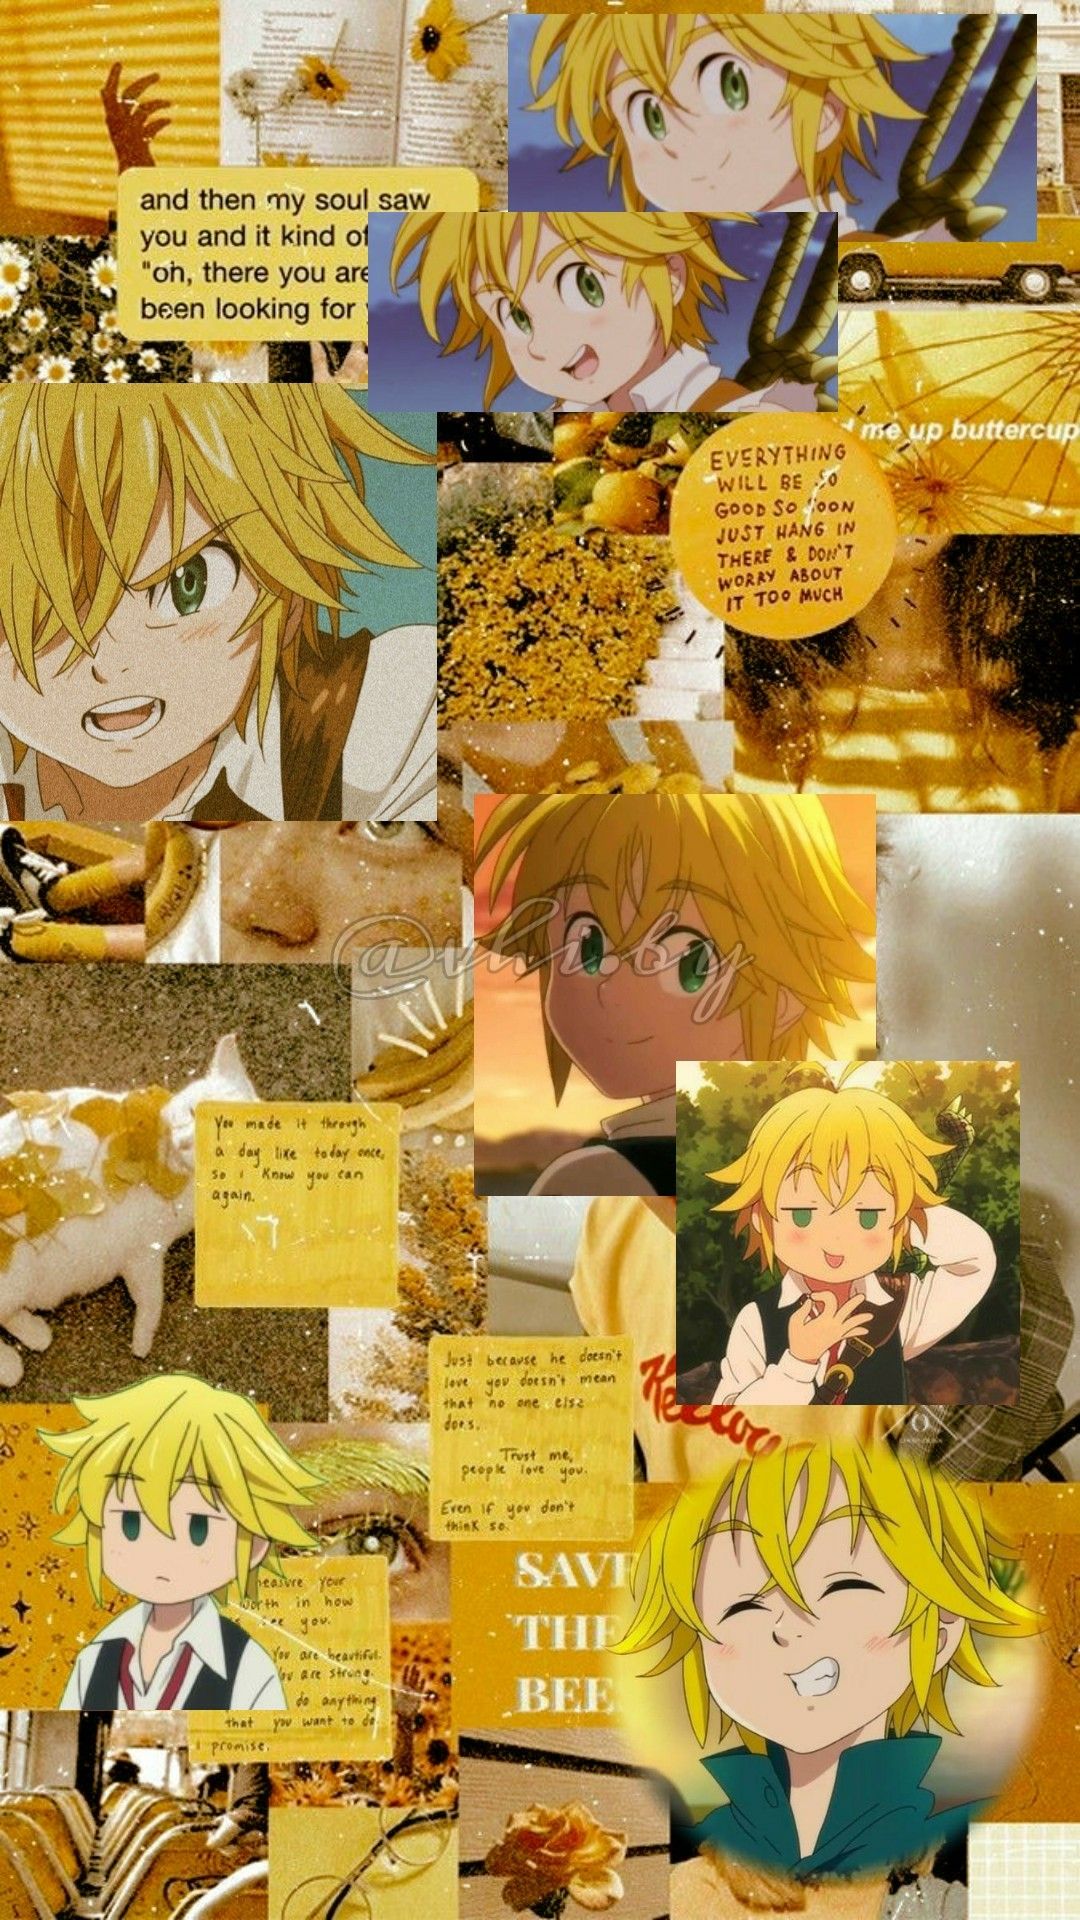 Wallpaper meliodas cute anime wallpaper seven adly sins anime anime friendship